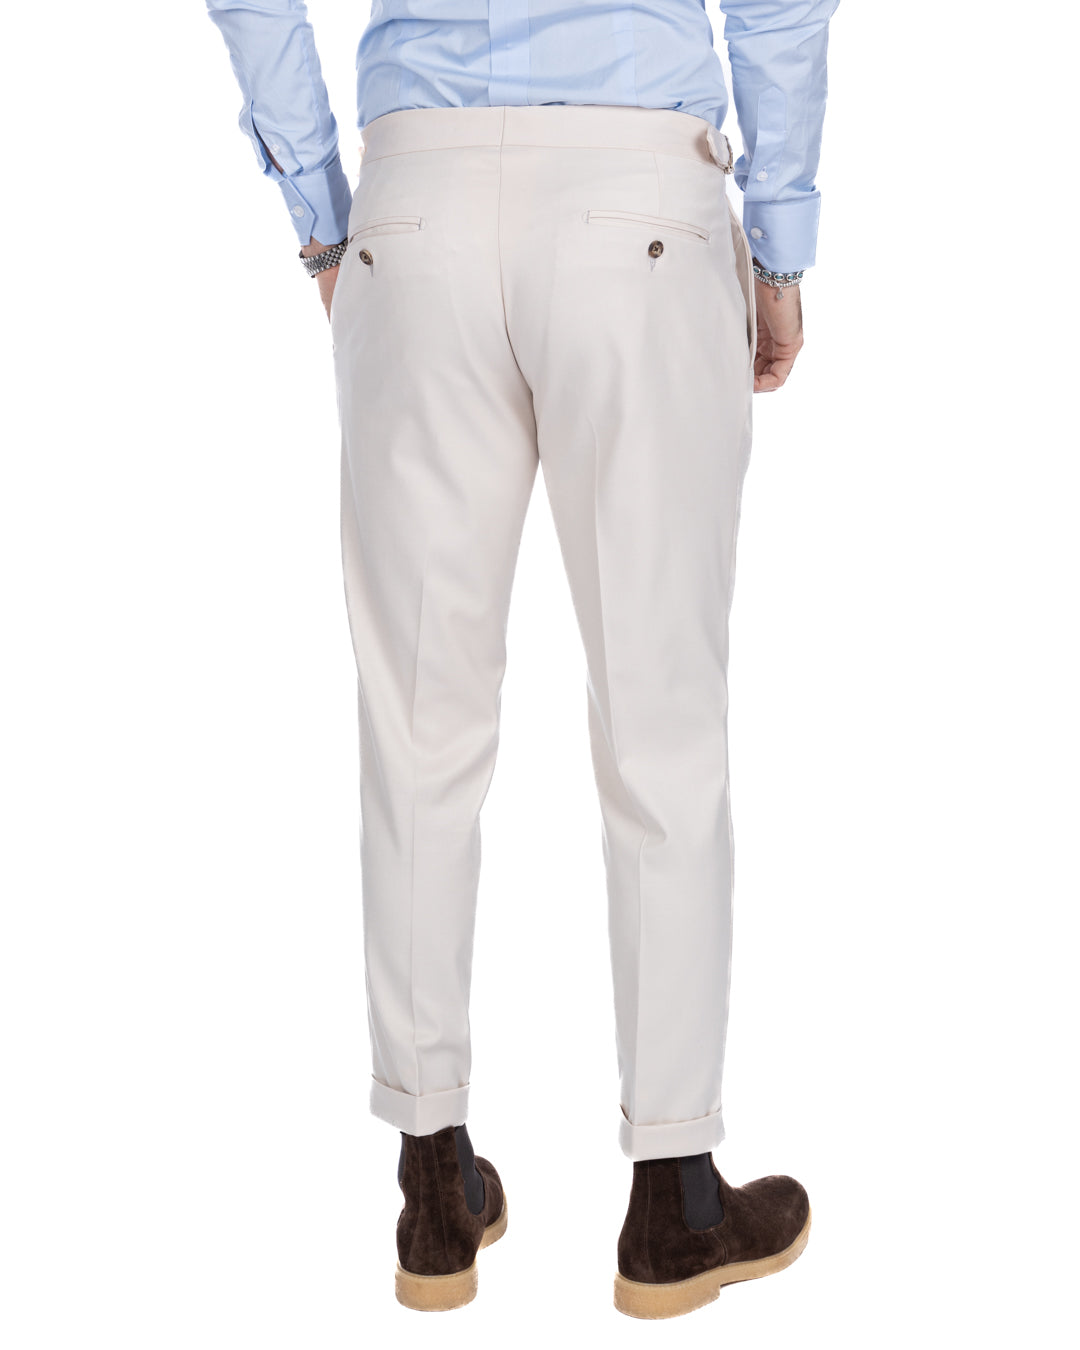 Otranto - pantalone panna con fibbie e pinces